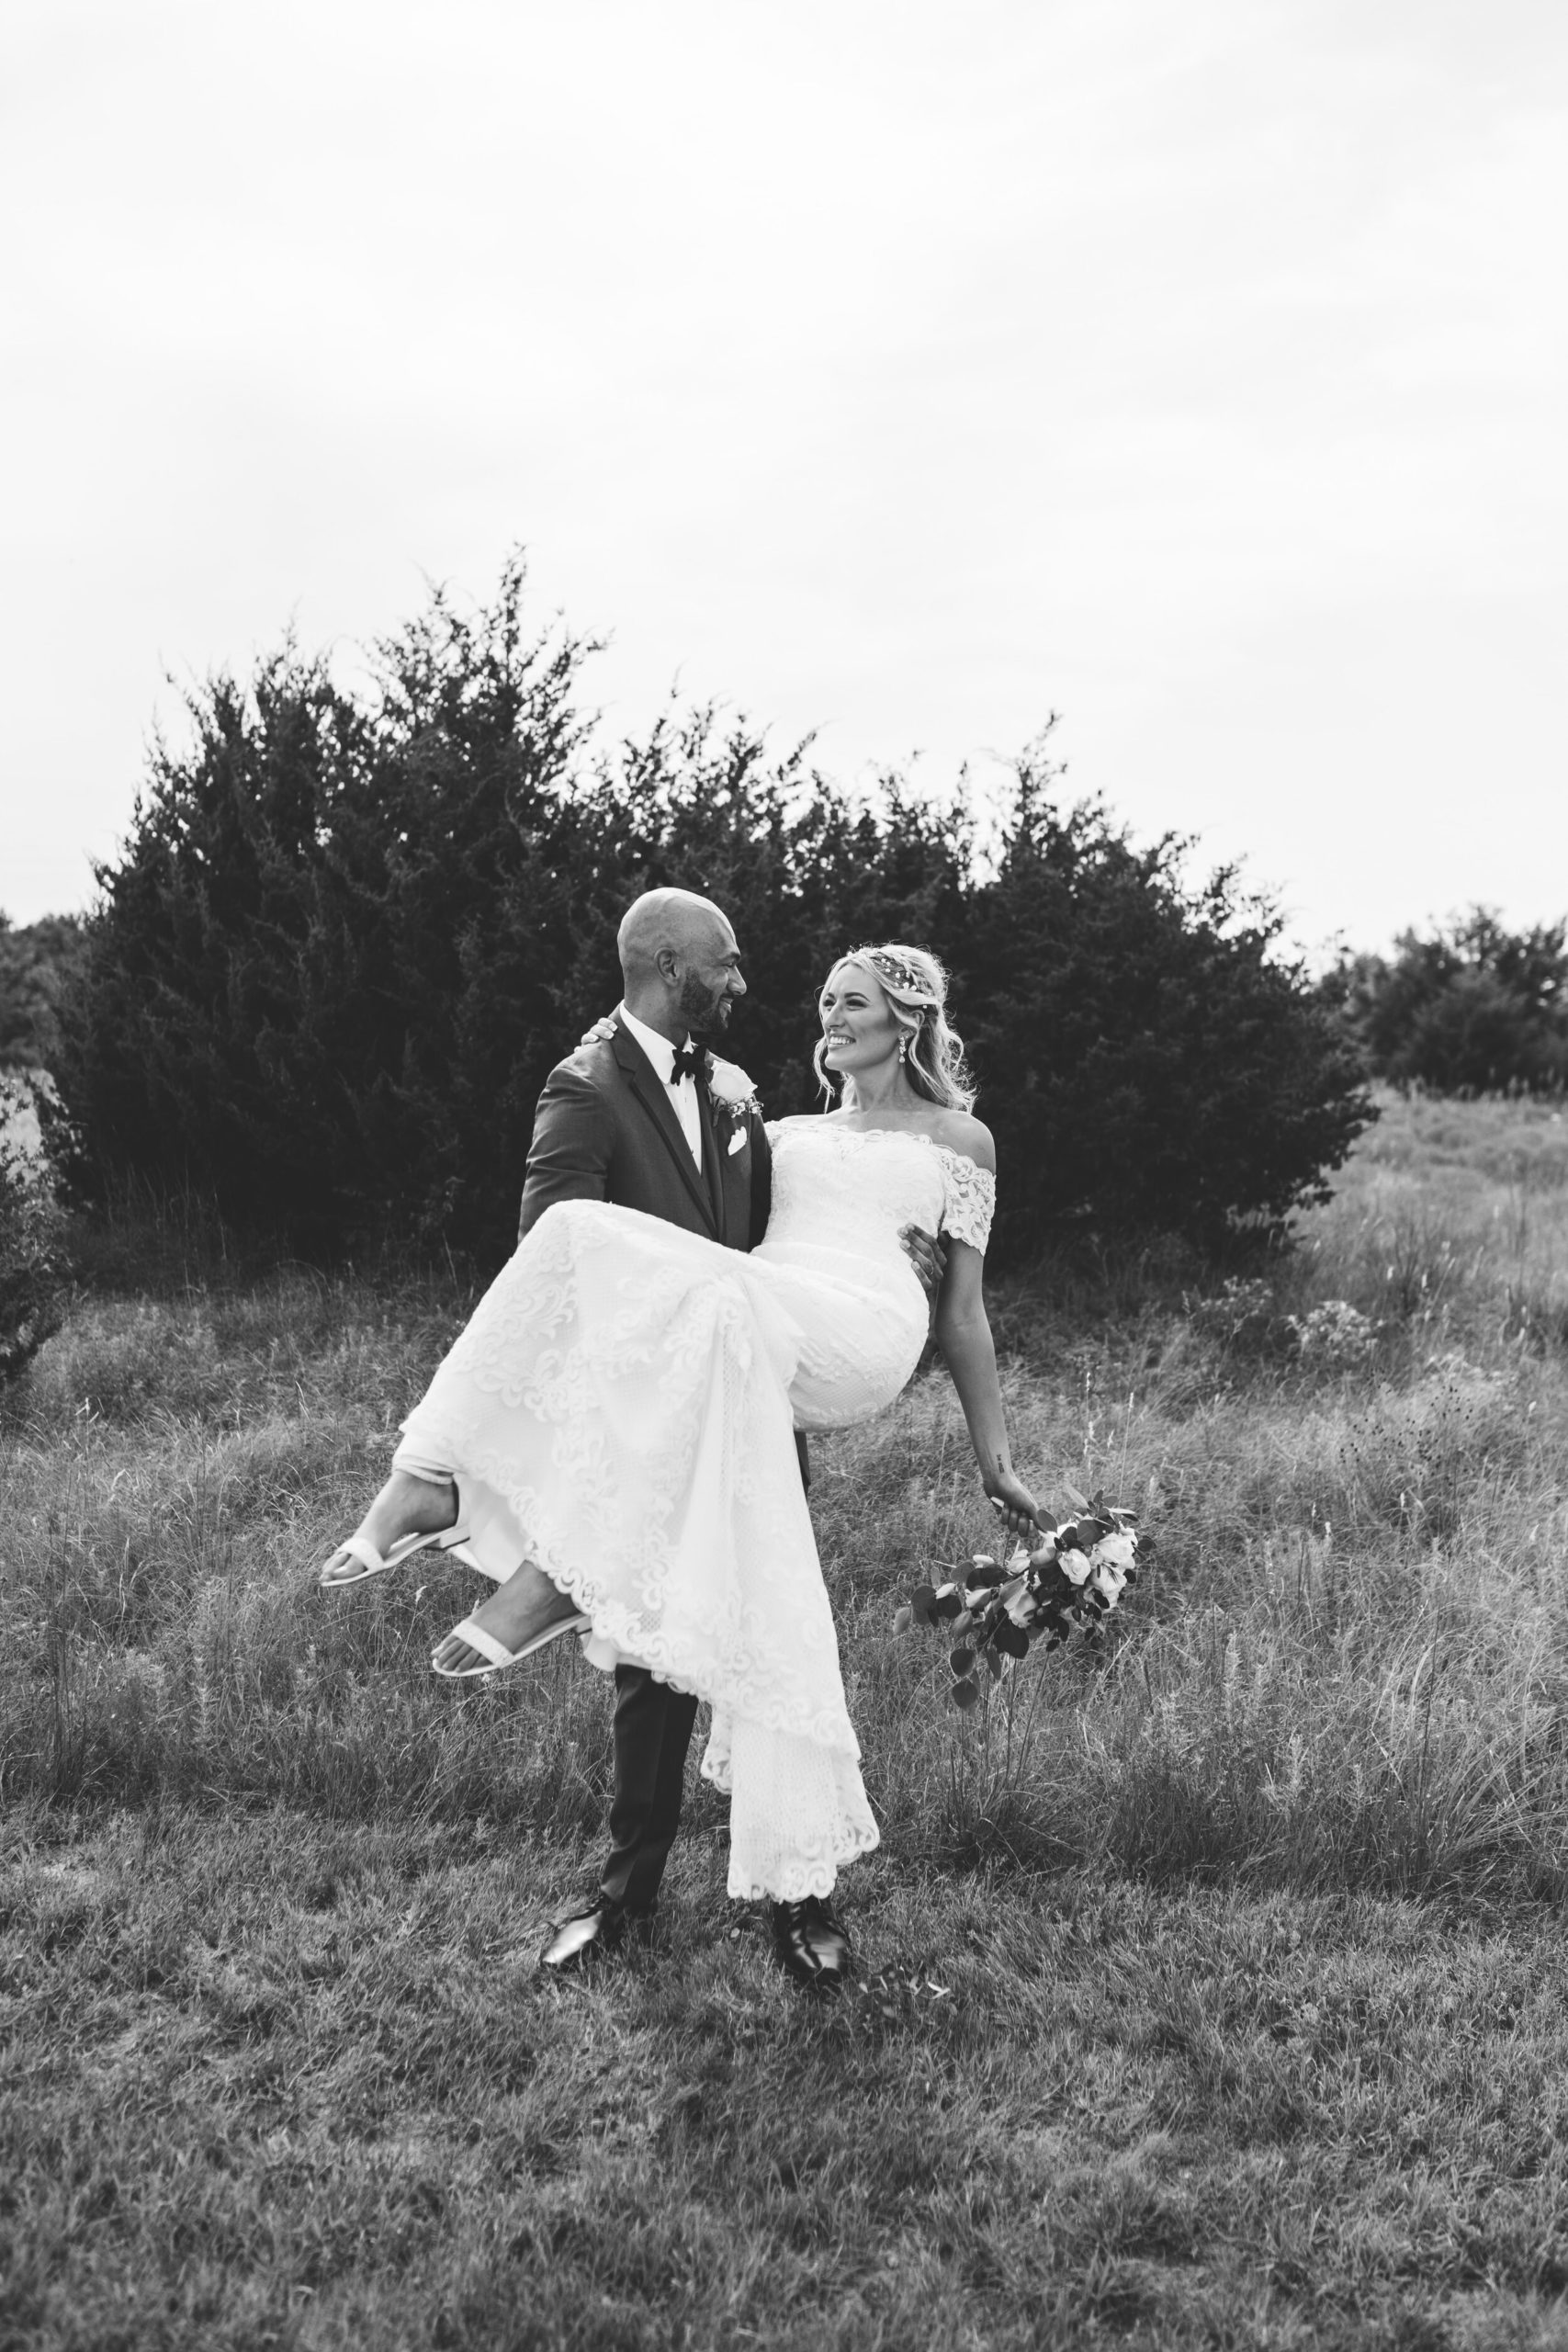 Hayley + Lorenzo - Summer White Chapel Wedding at Stone Hill Barn in Augusta, Kansas109.jpg